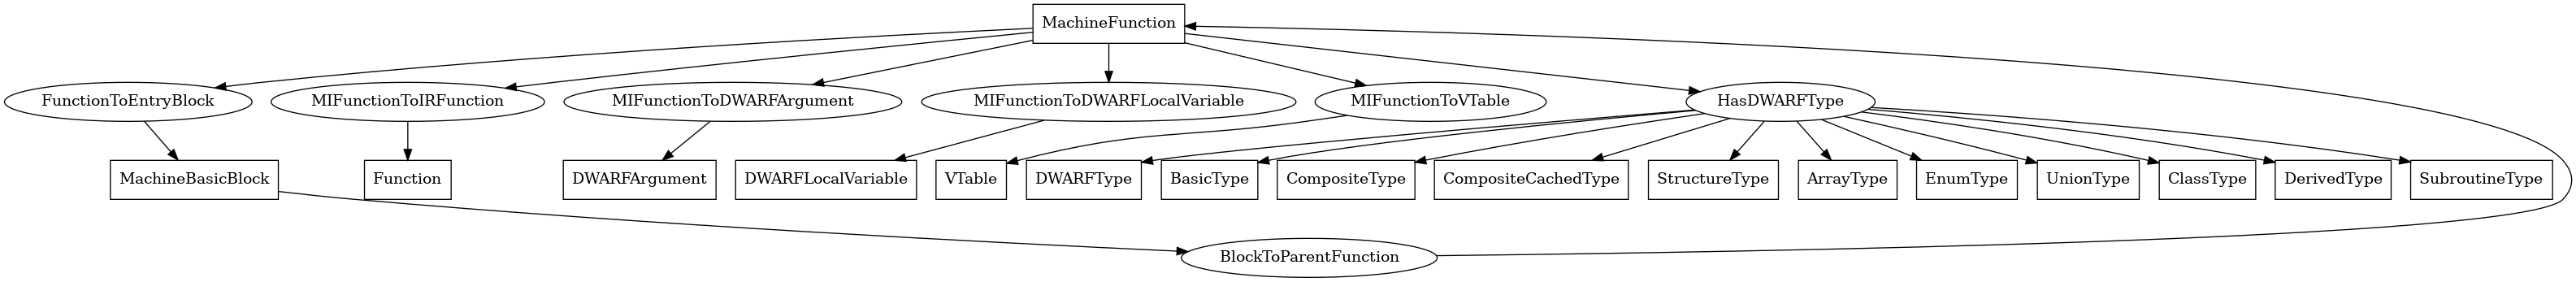 Entity-relationship diagram for MachineFunction nodes